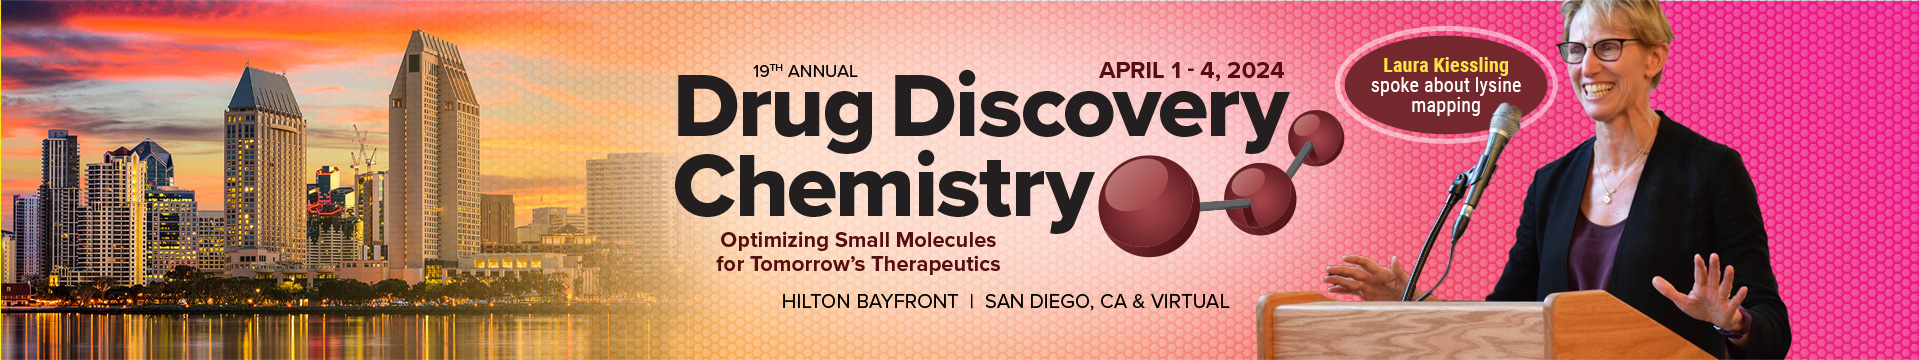 Drug Discovery Chemistry 2024, San Diego, California, United States